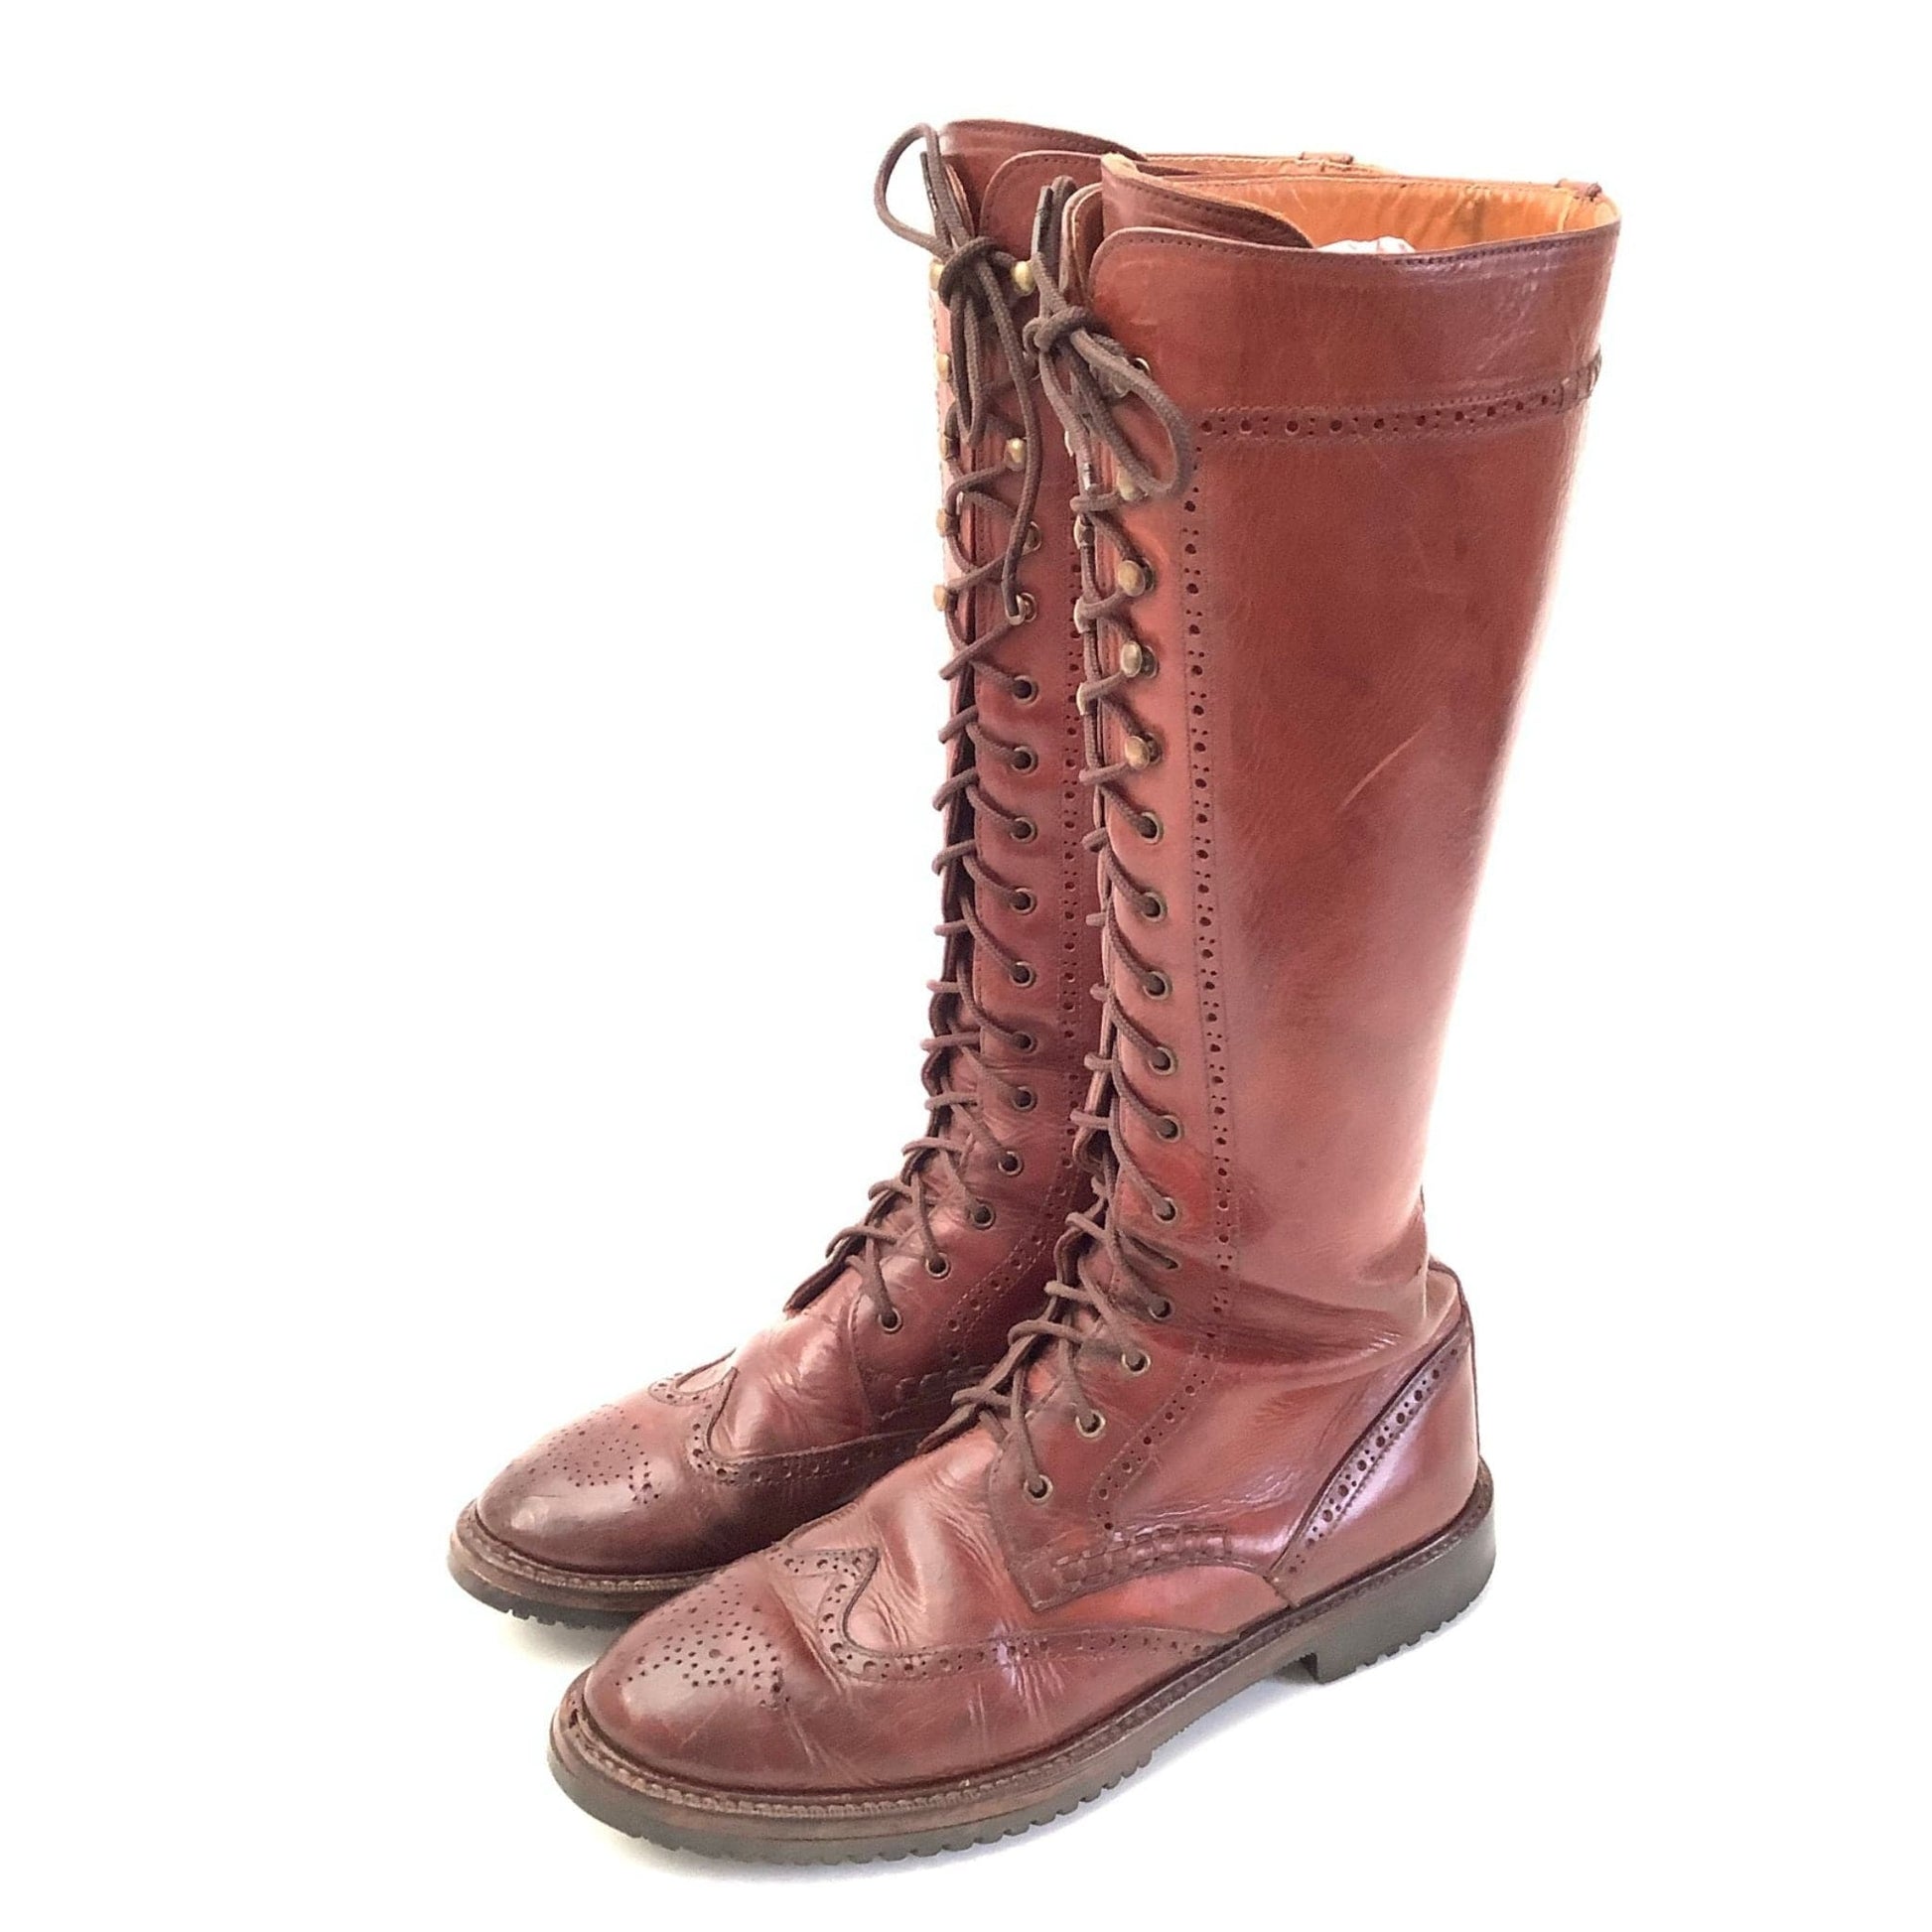 Designer Combat Boots 10 / Tan / Vintage 1980s